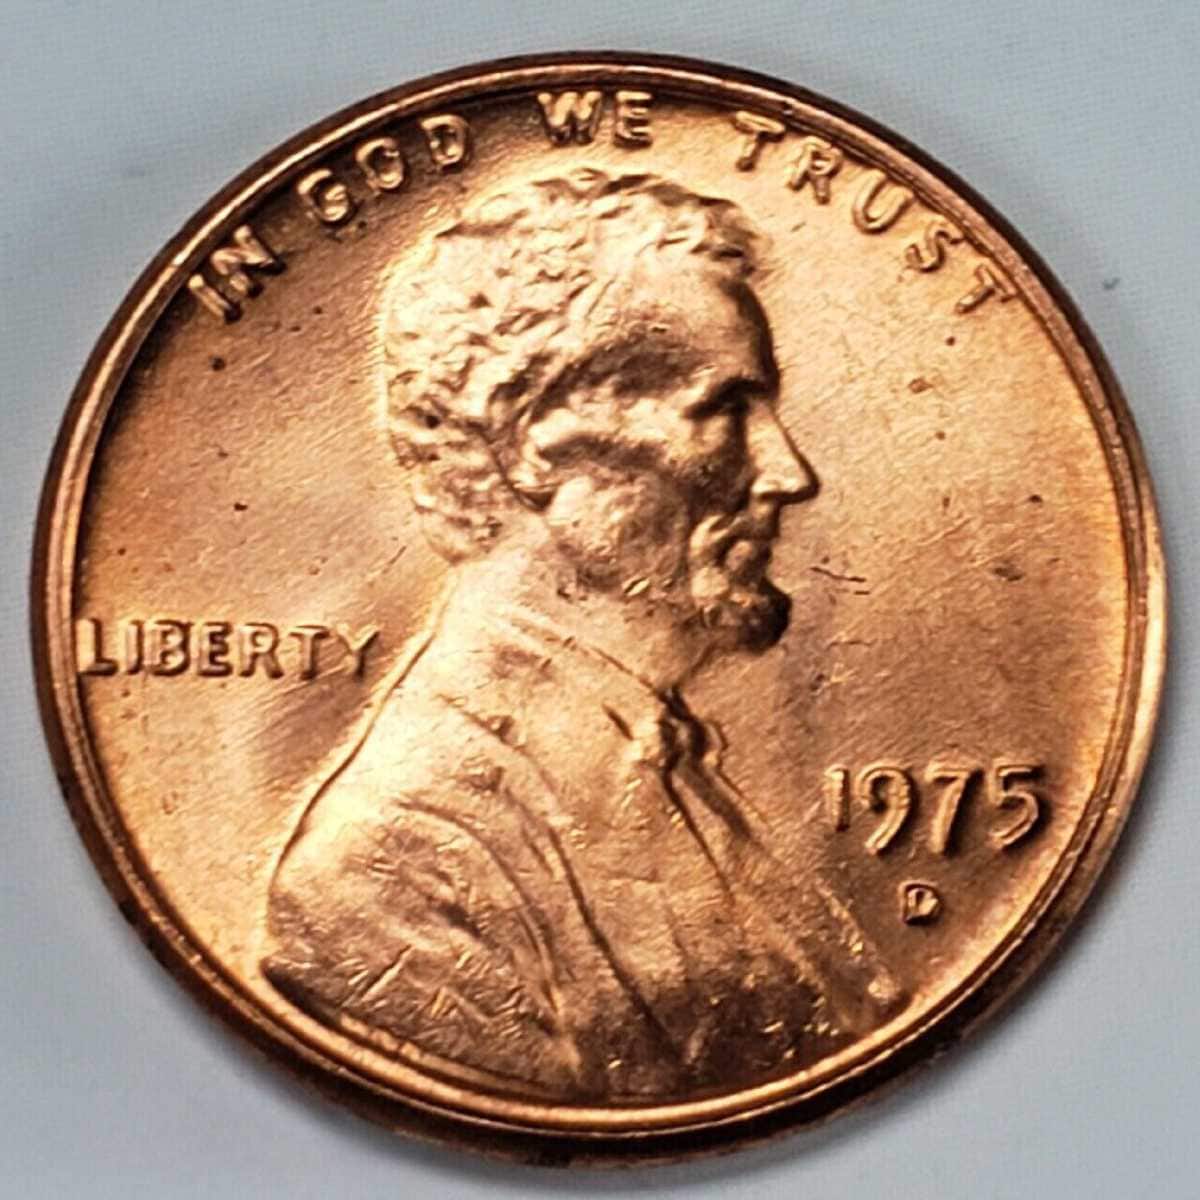 1975 penny Double Die Error